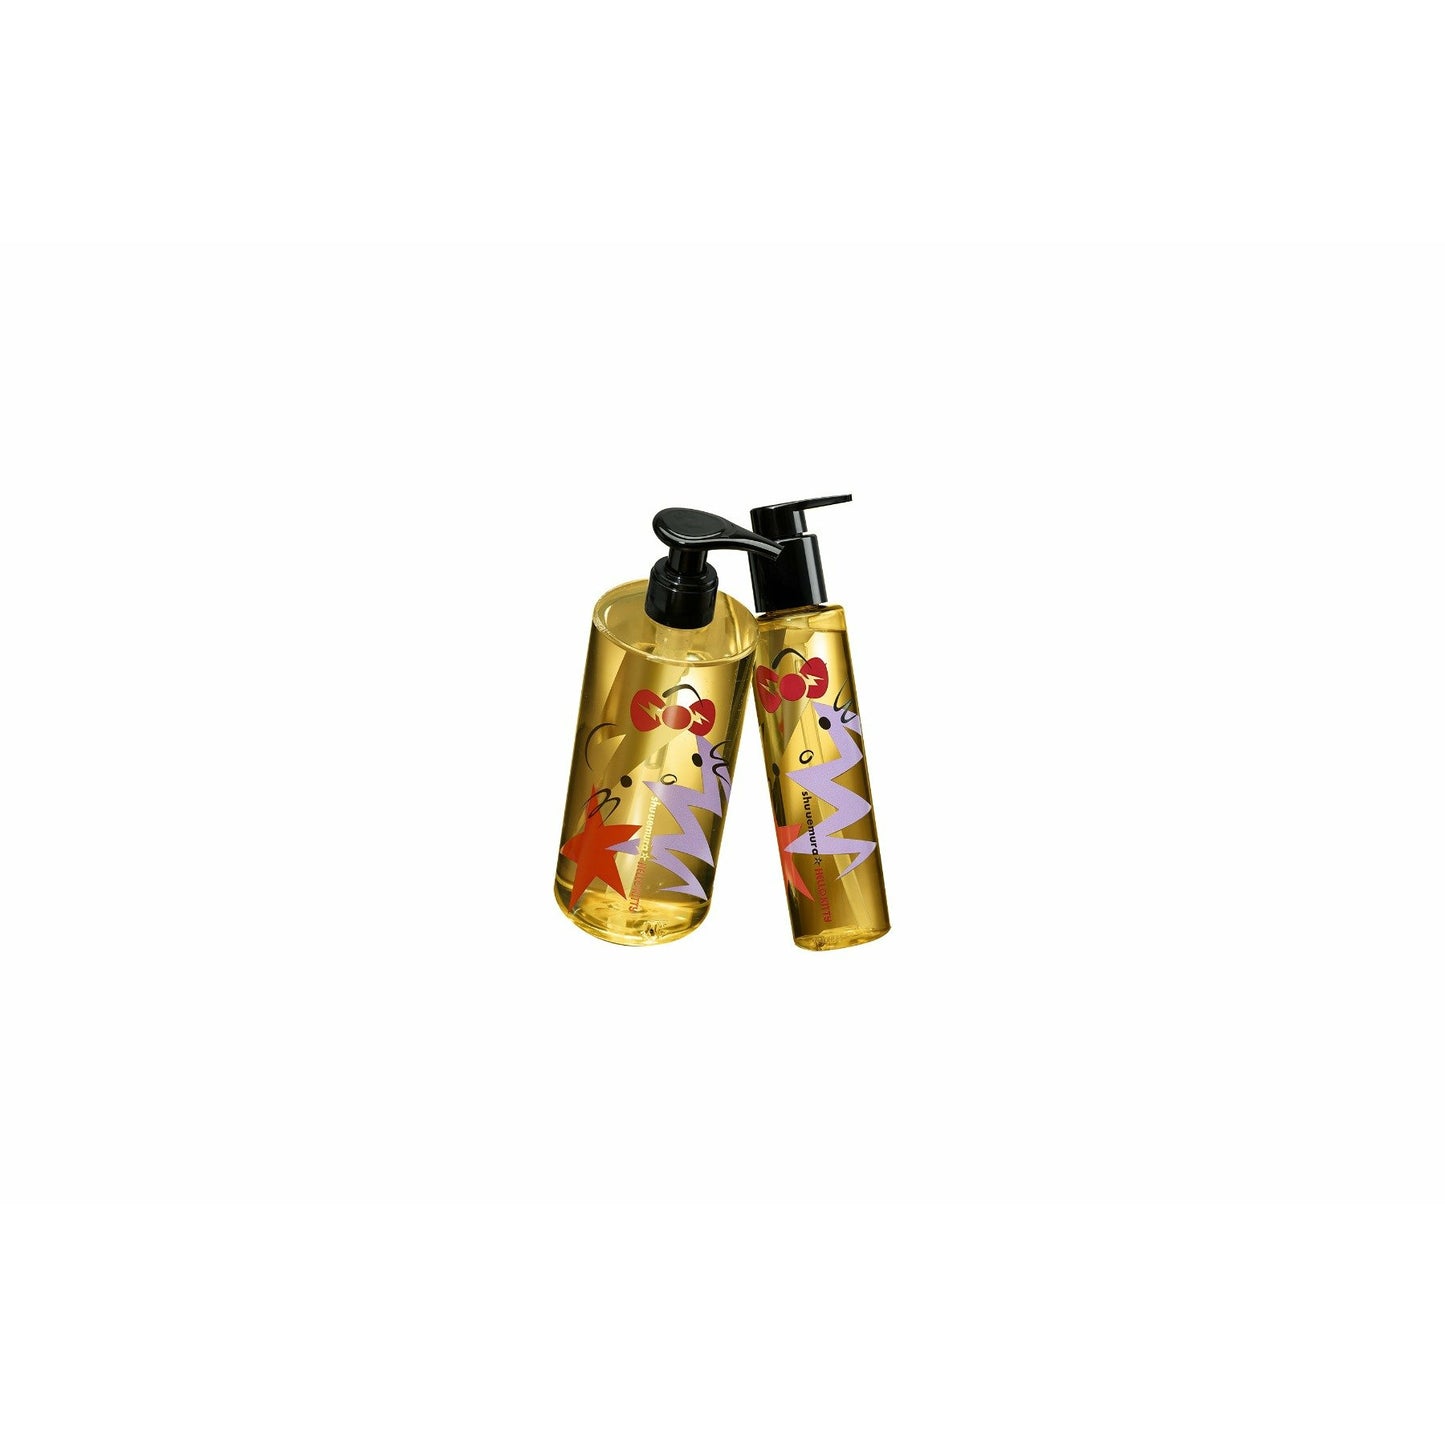 Shu Uemura Essence Absolue Nourishing Protective Oil x Hello Kitty Edition